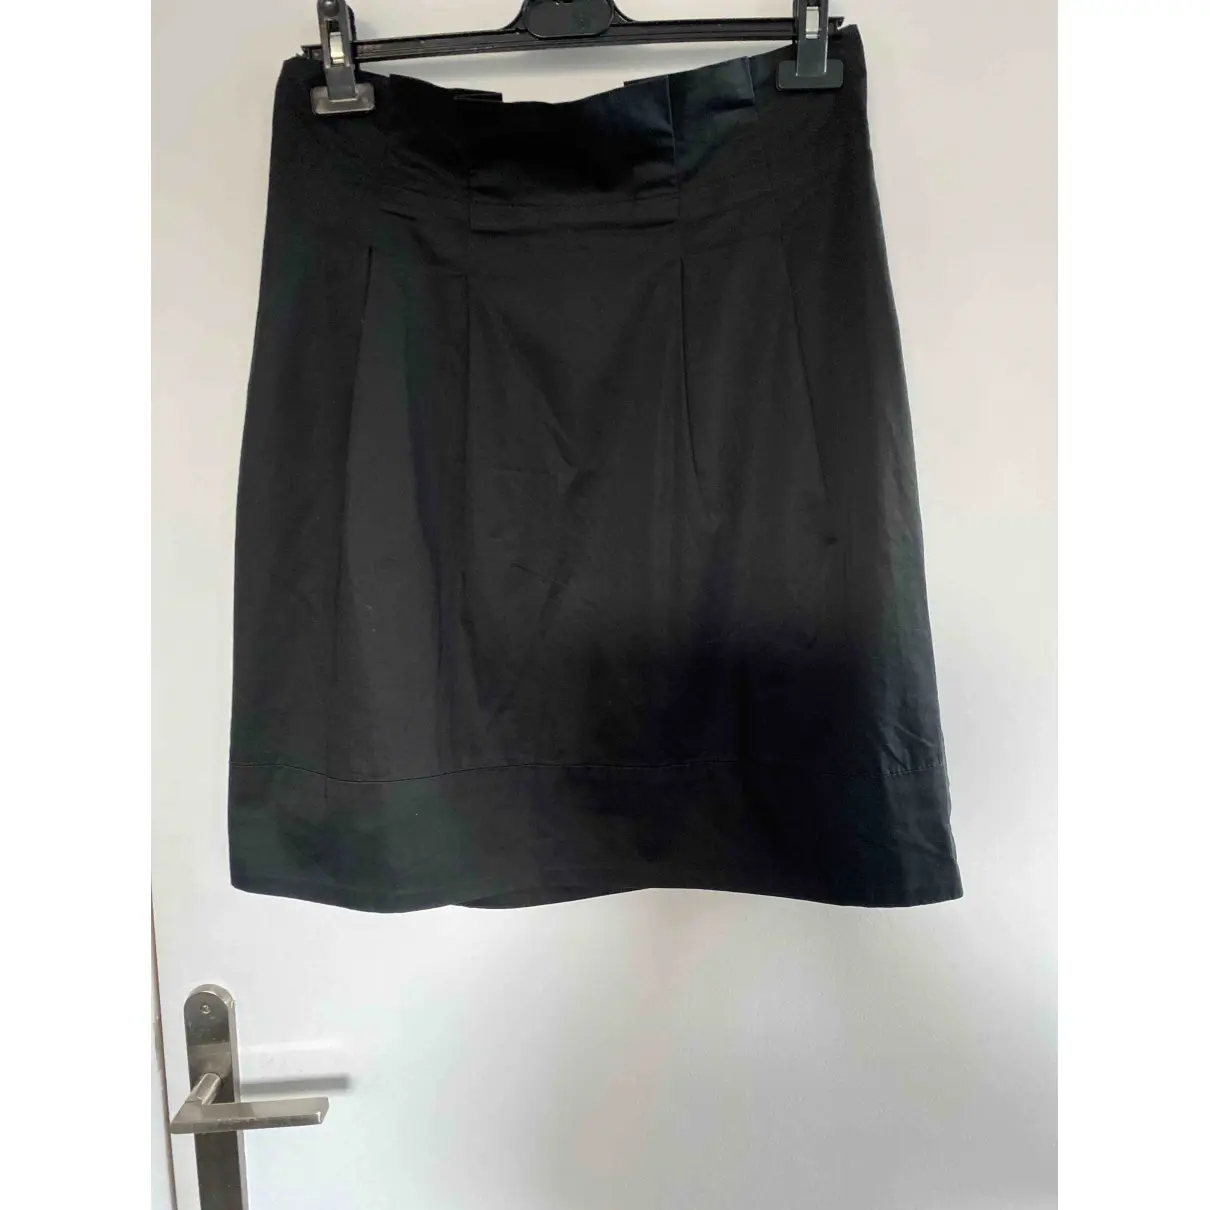 Buy Bcbg Max Azria Skirt online